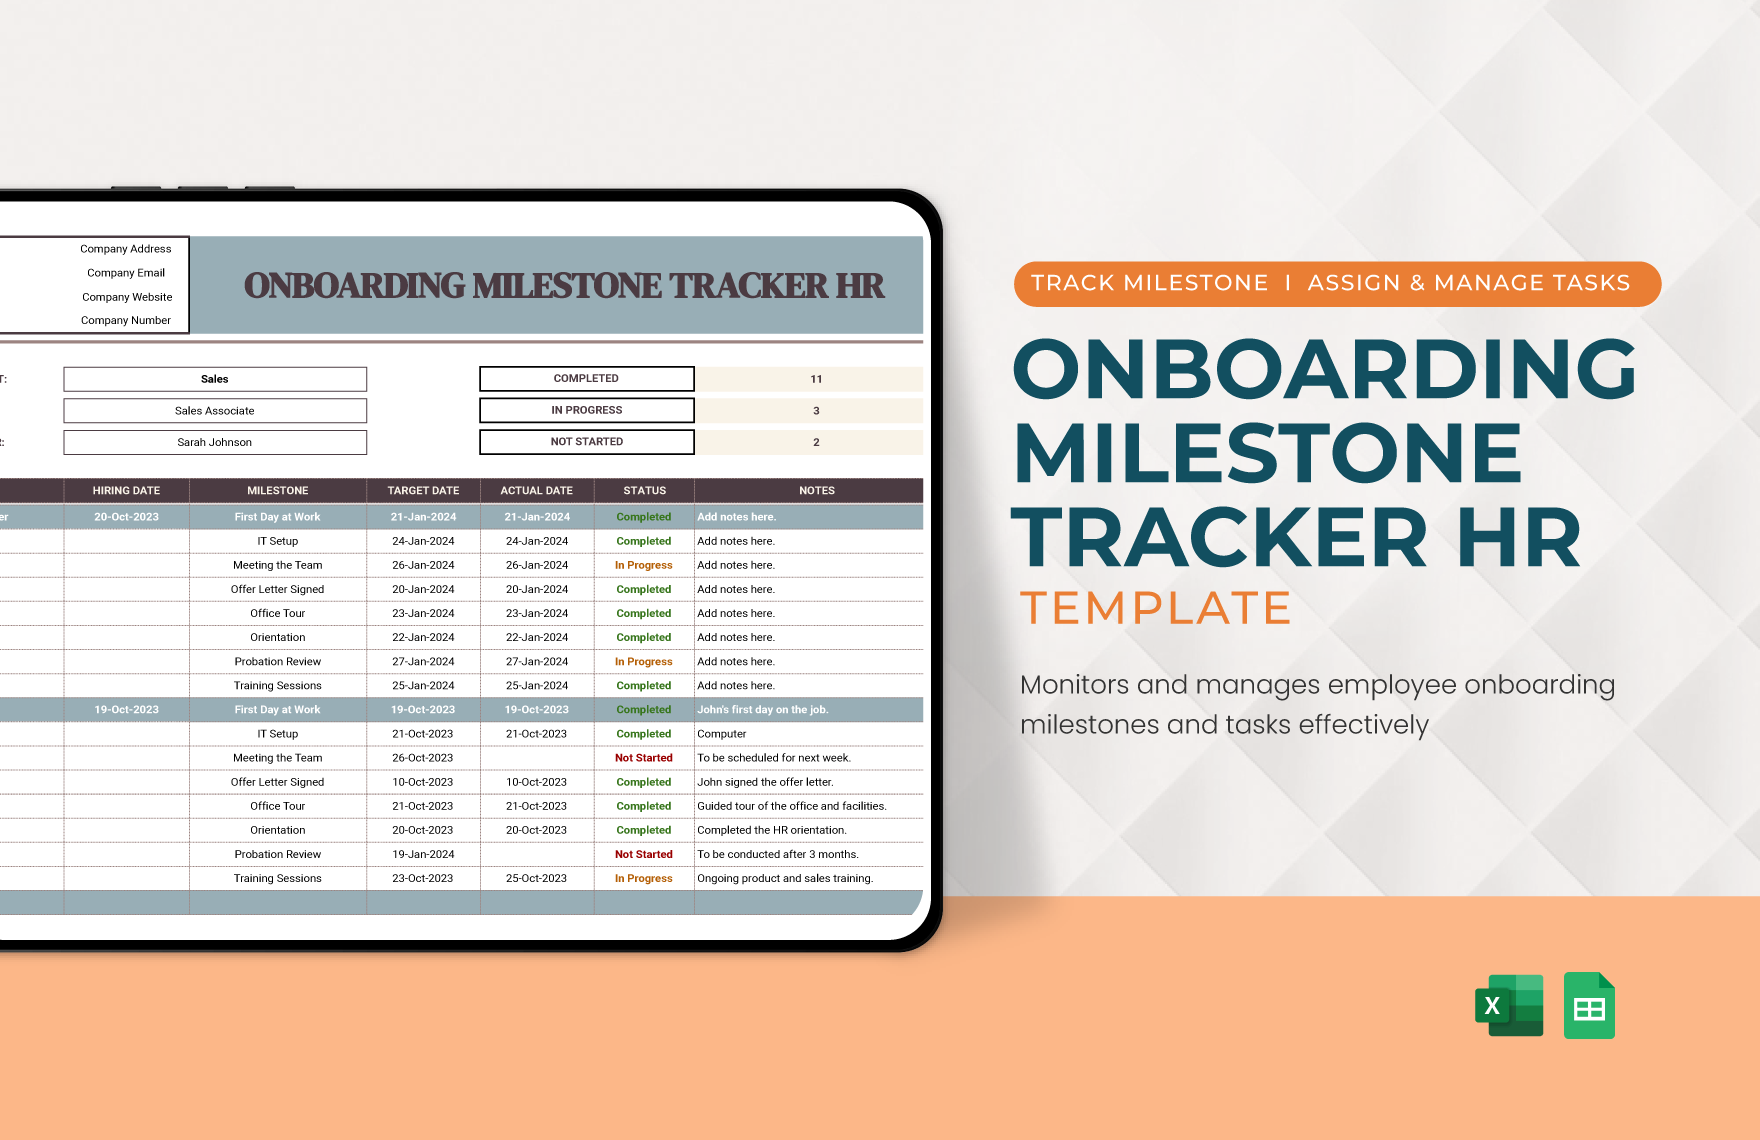 Onboarding Milestone Tracker HR Template